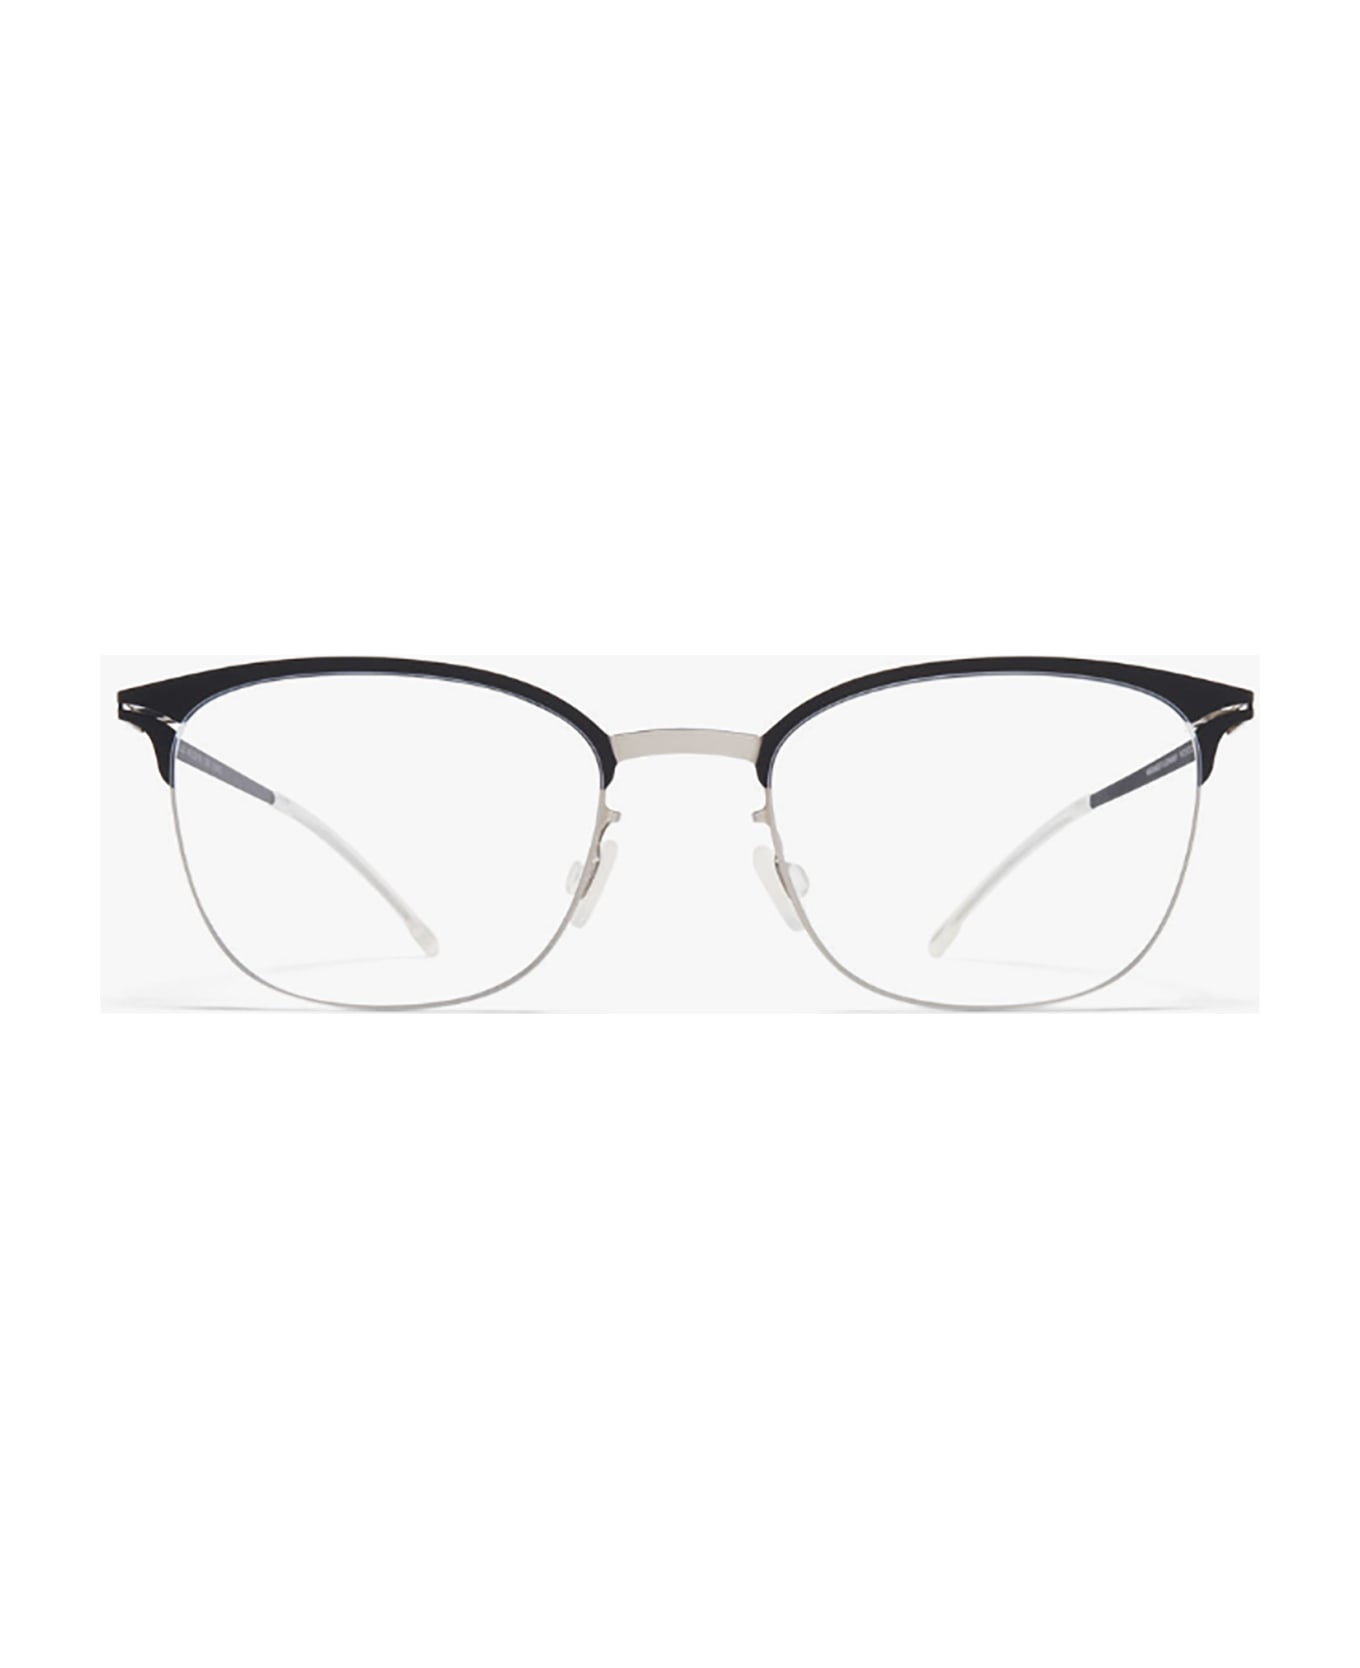 Mykita HOLLIS Eyewear - Silver/black Clear